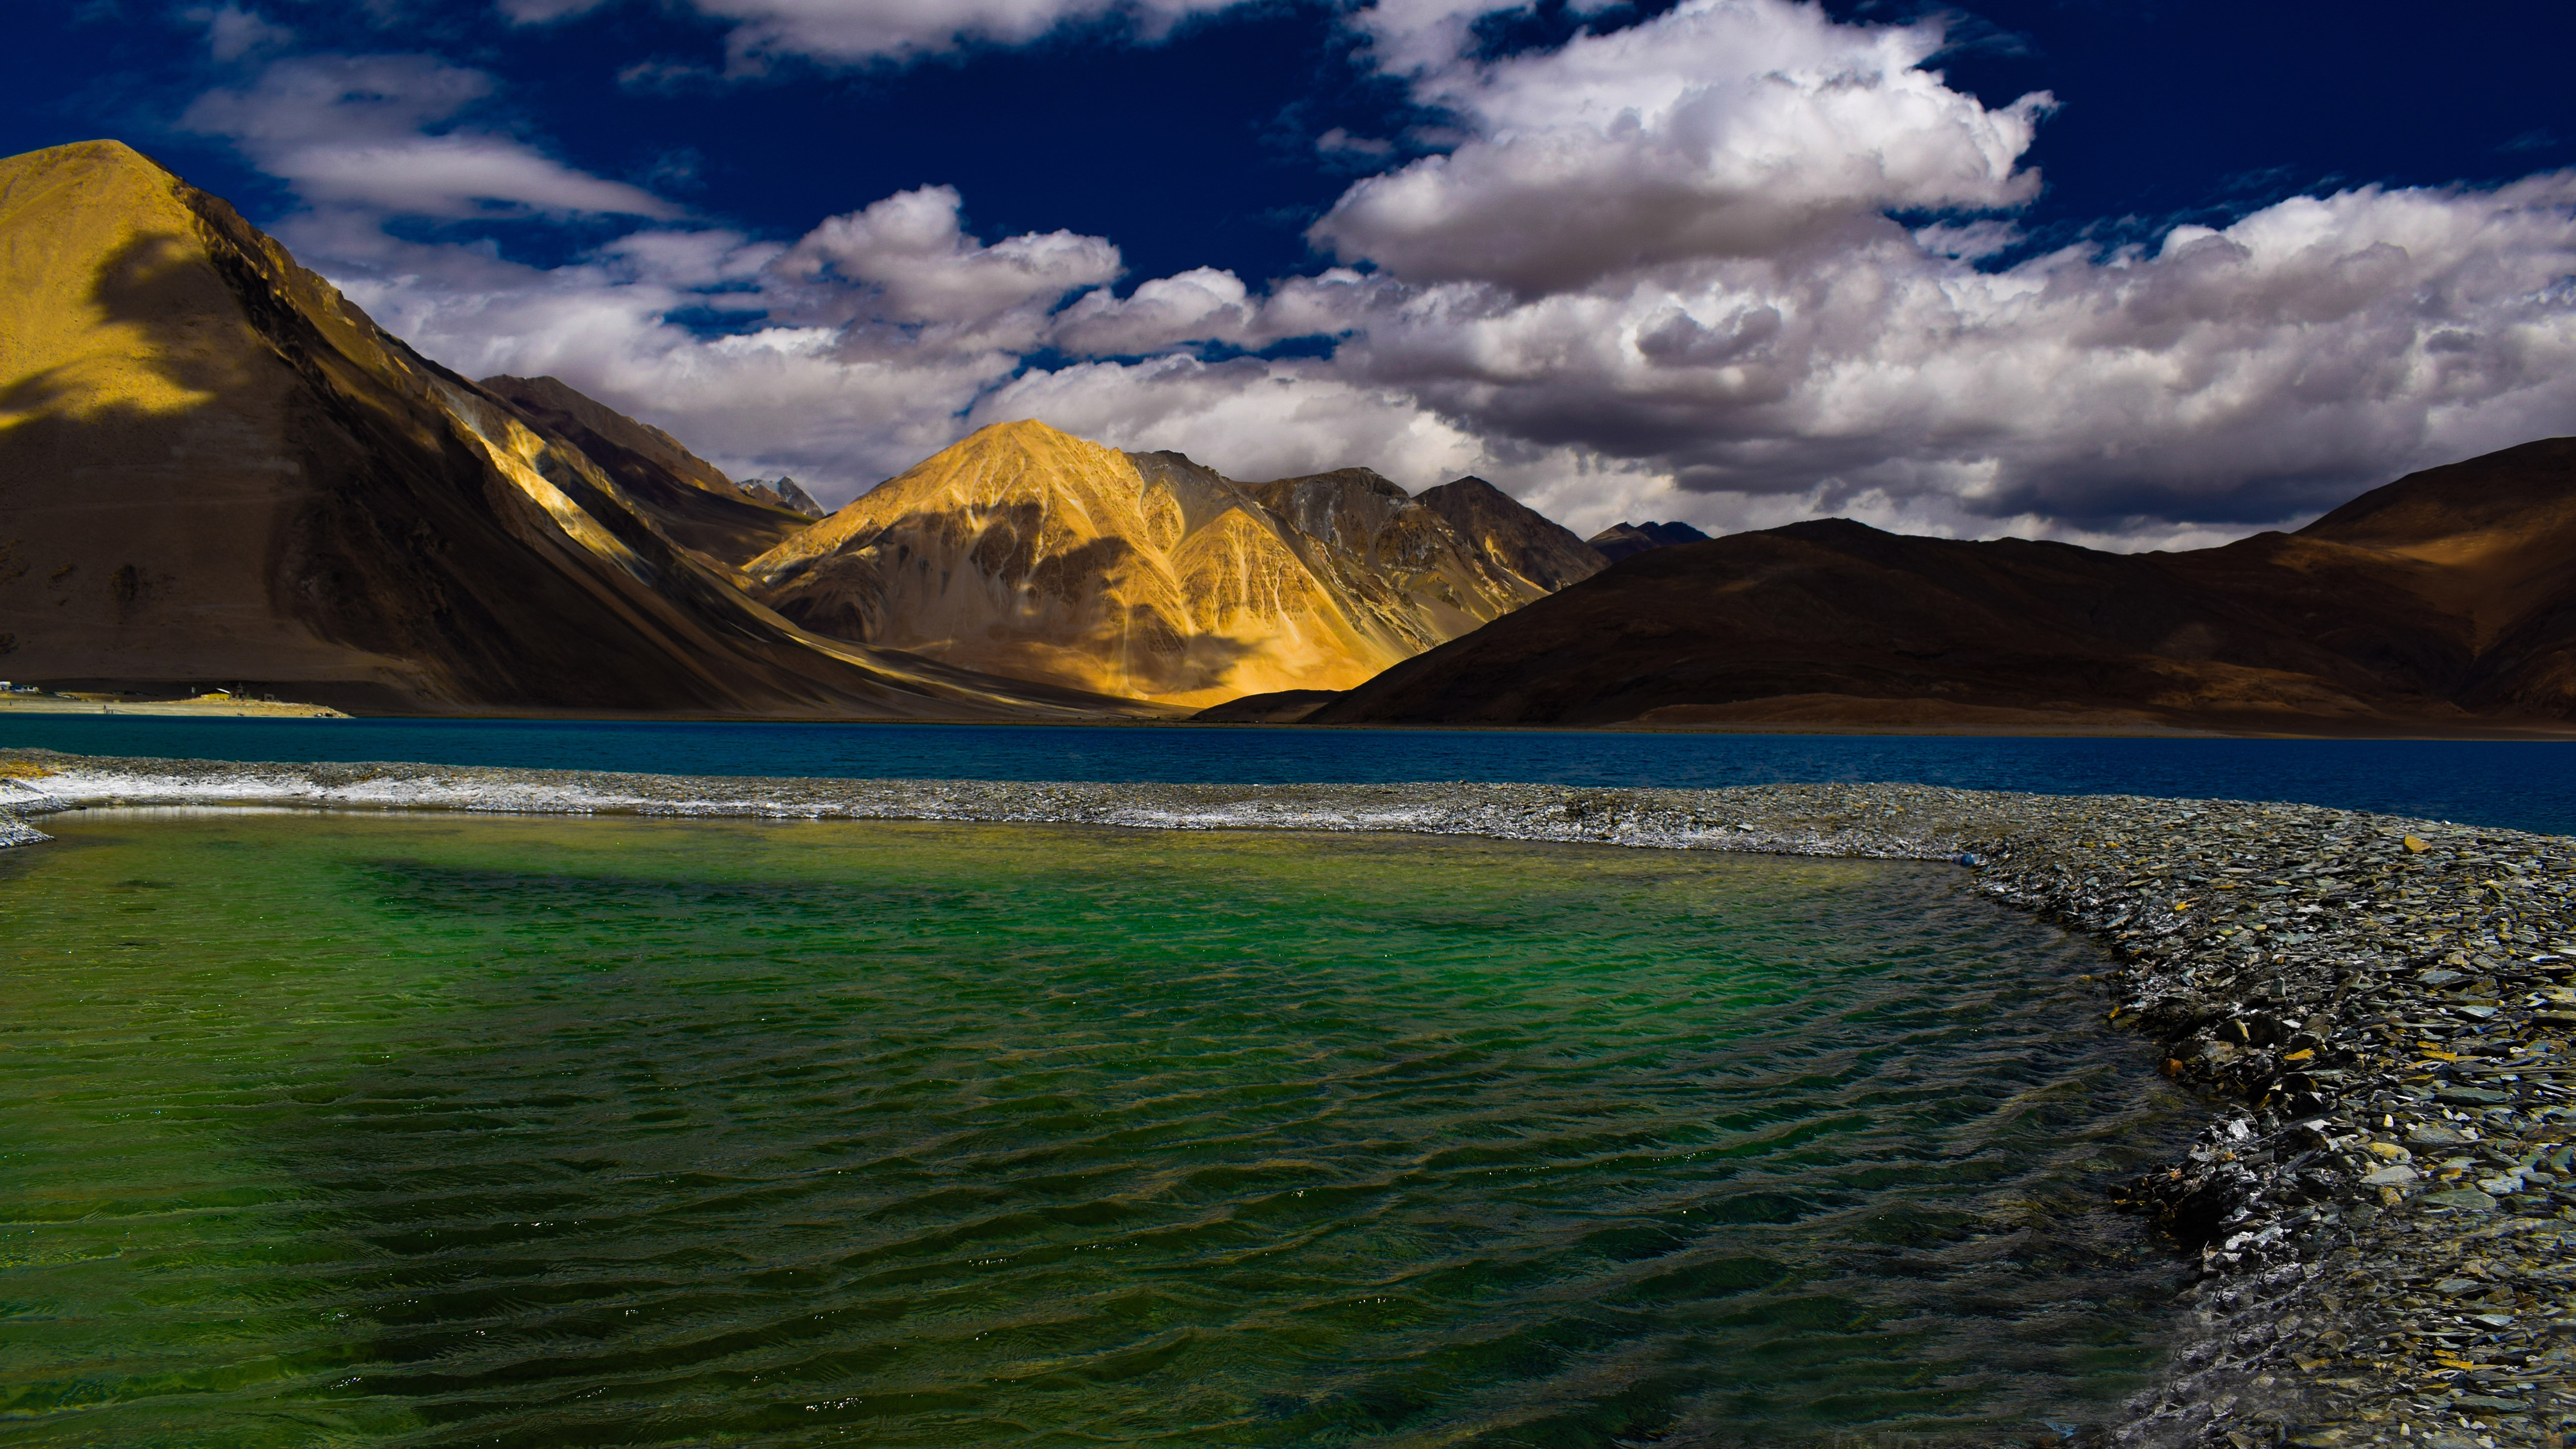 Desktop HD Wallpapers Pangong Tso Lake Ladakh Kashmir A Green Lagoon by the side of a Pangong Tso the blue lake 5200x2925